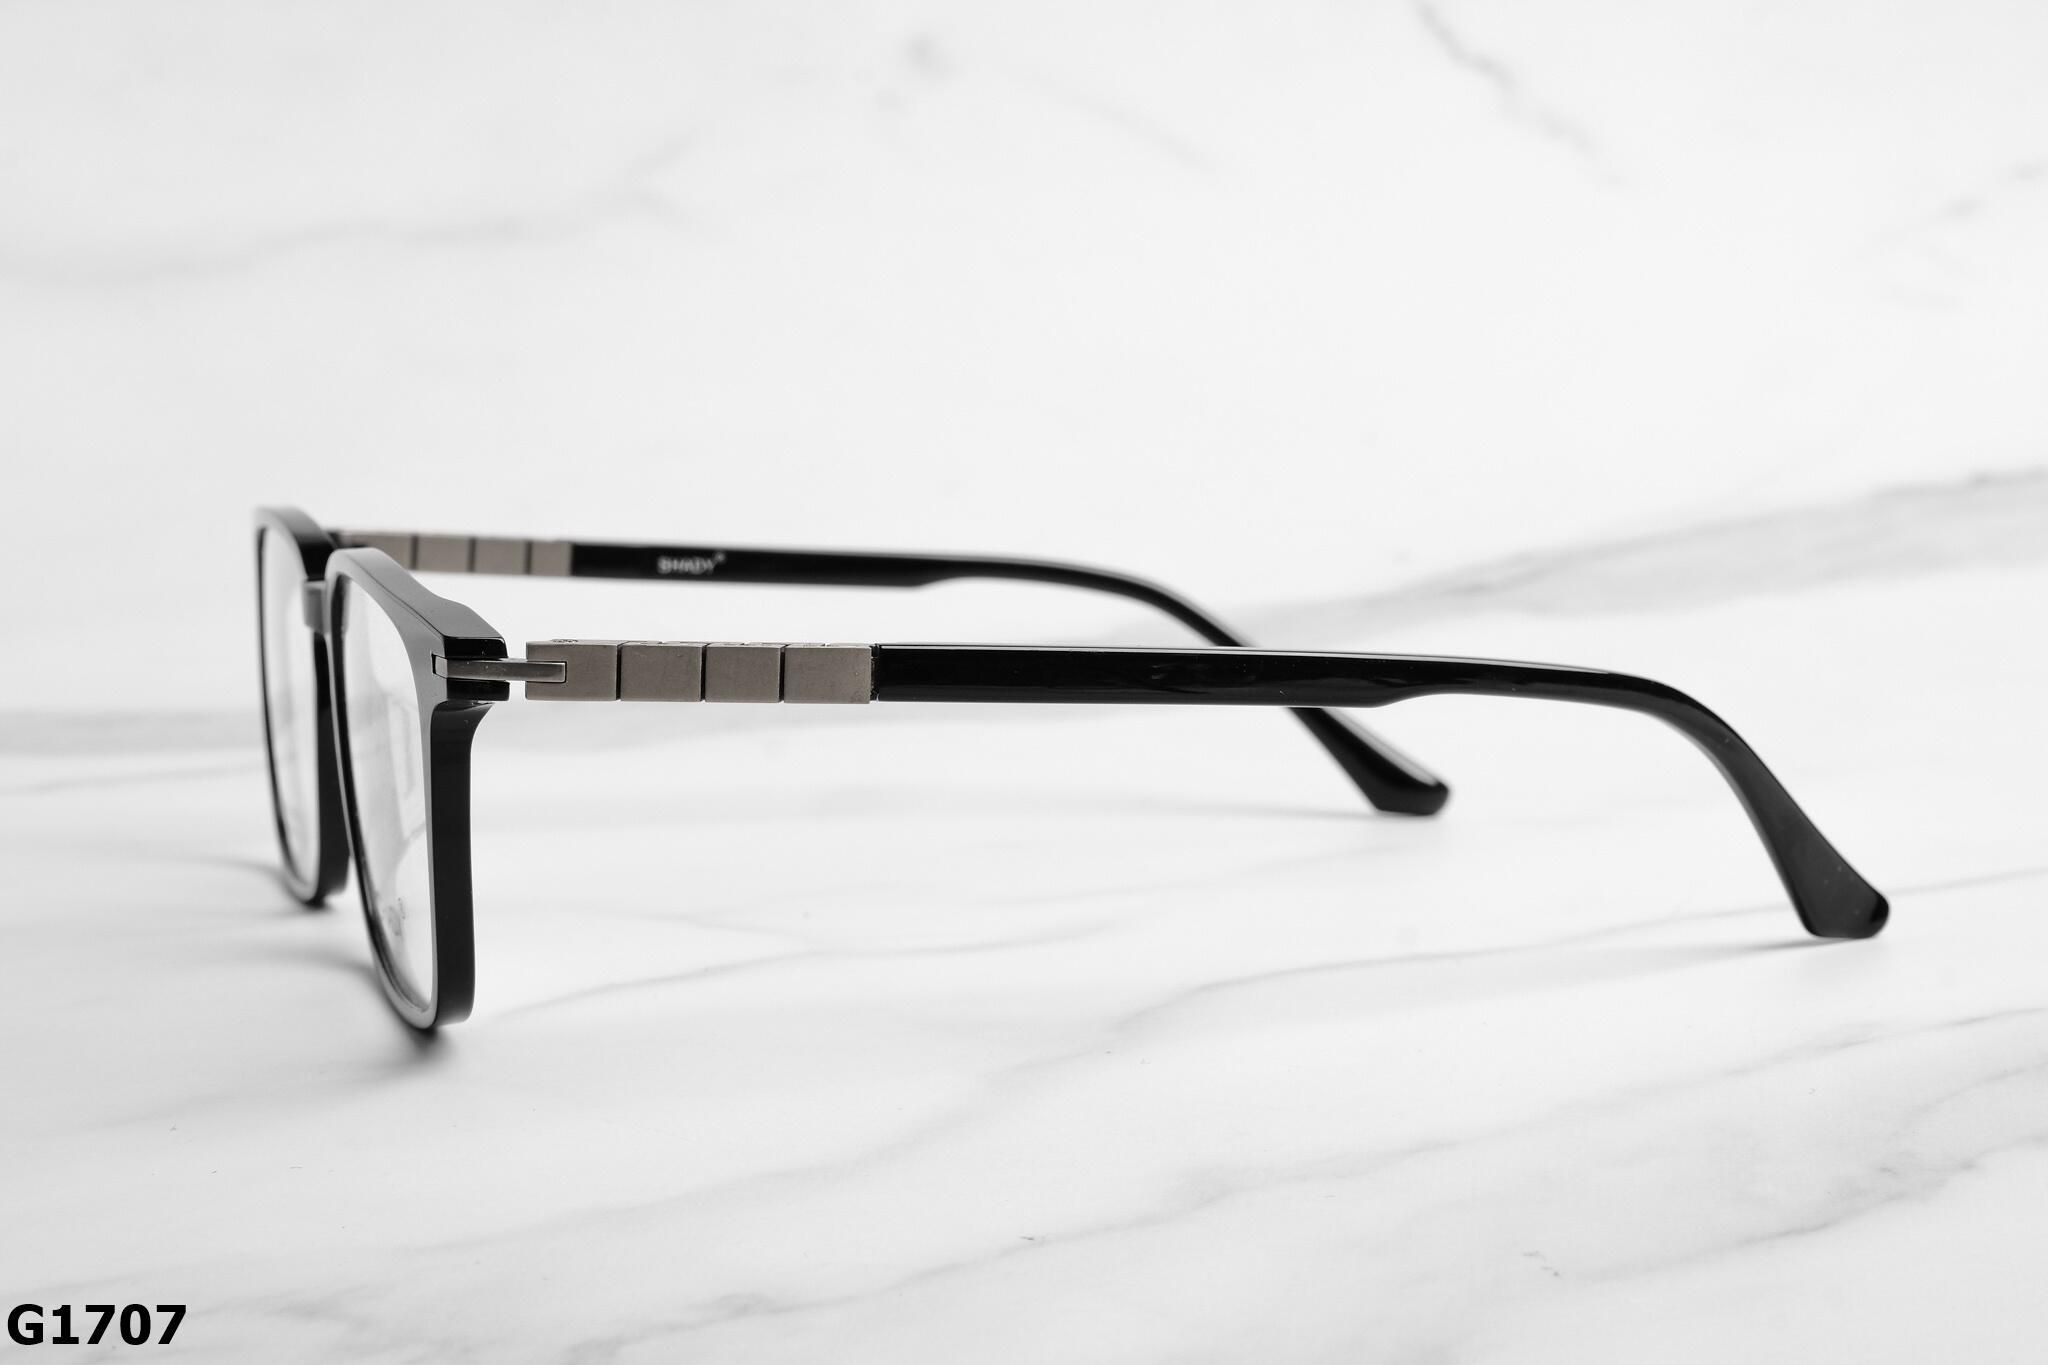  SHADY Eyewear - Glasses - G1707 